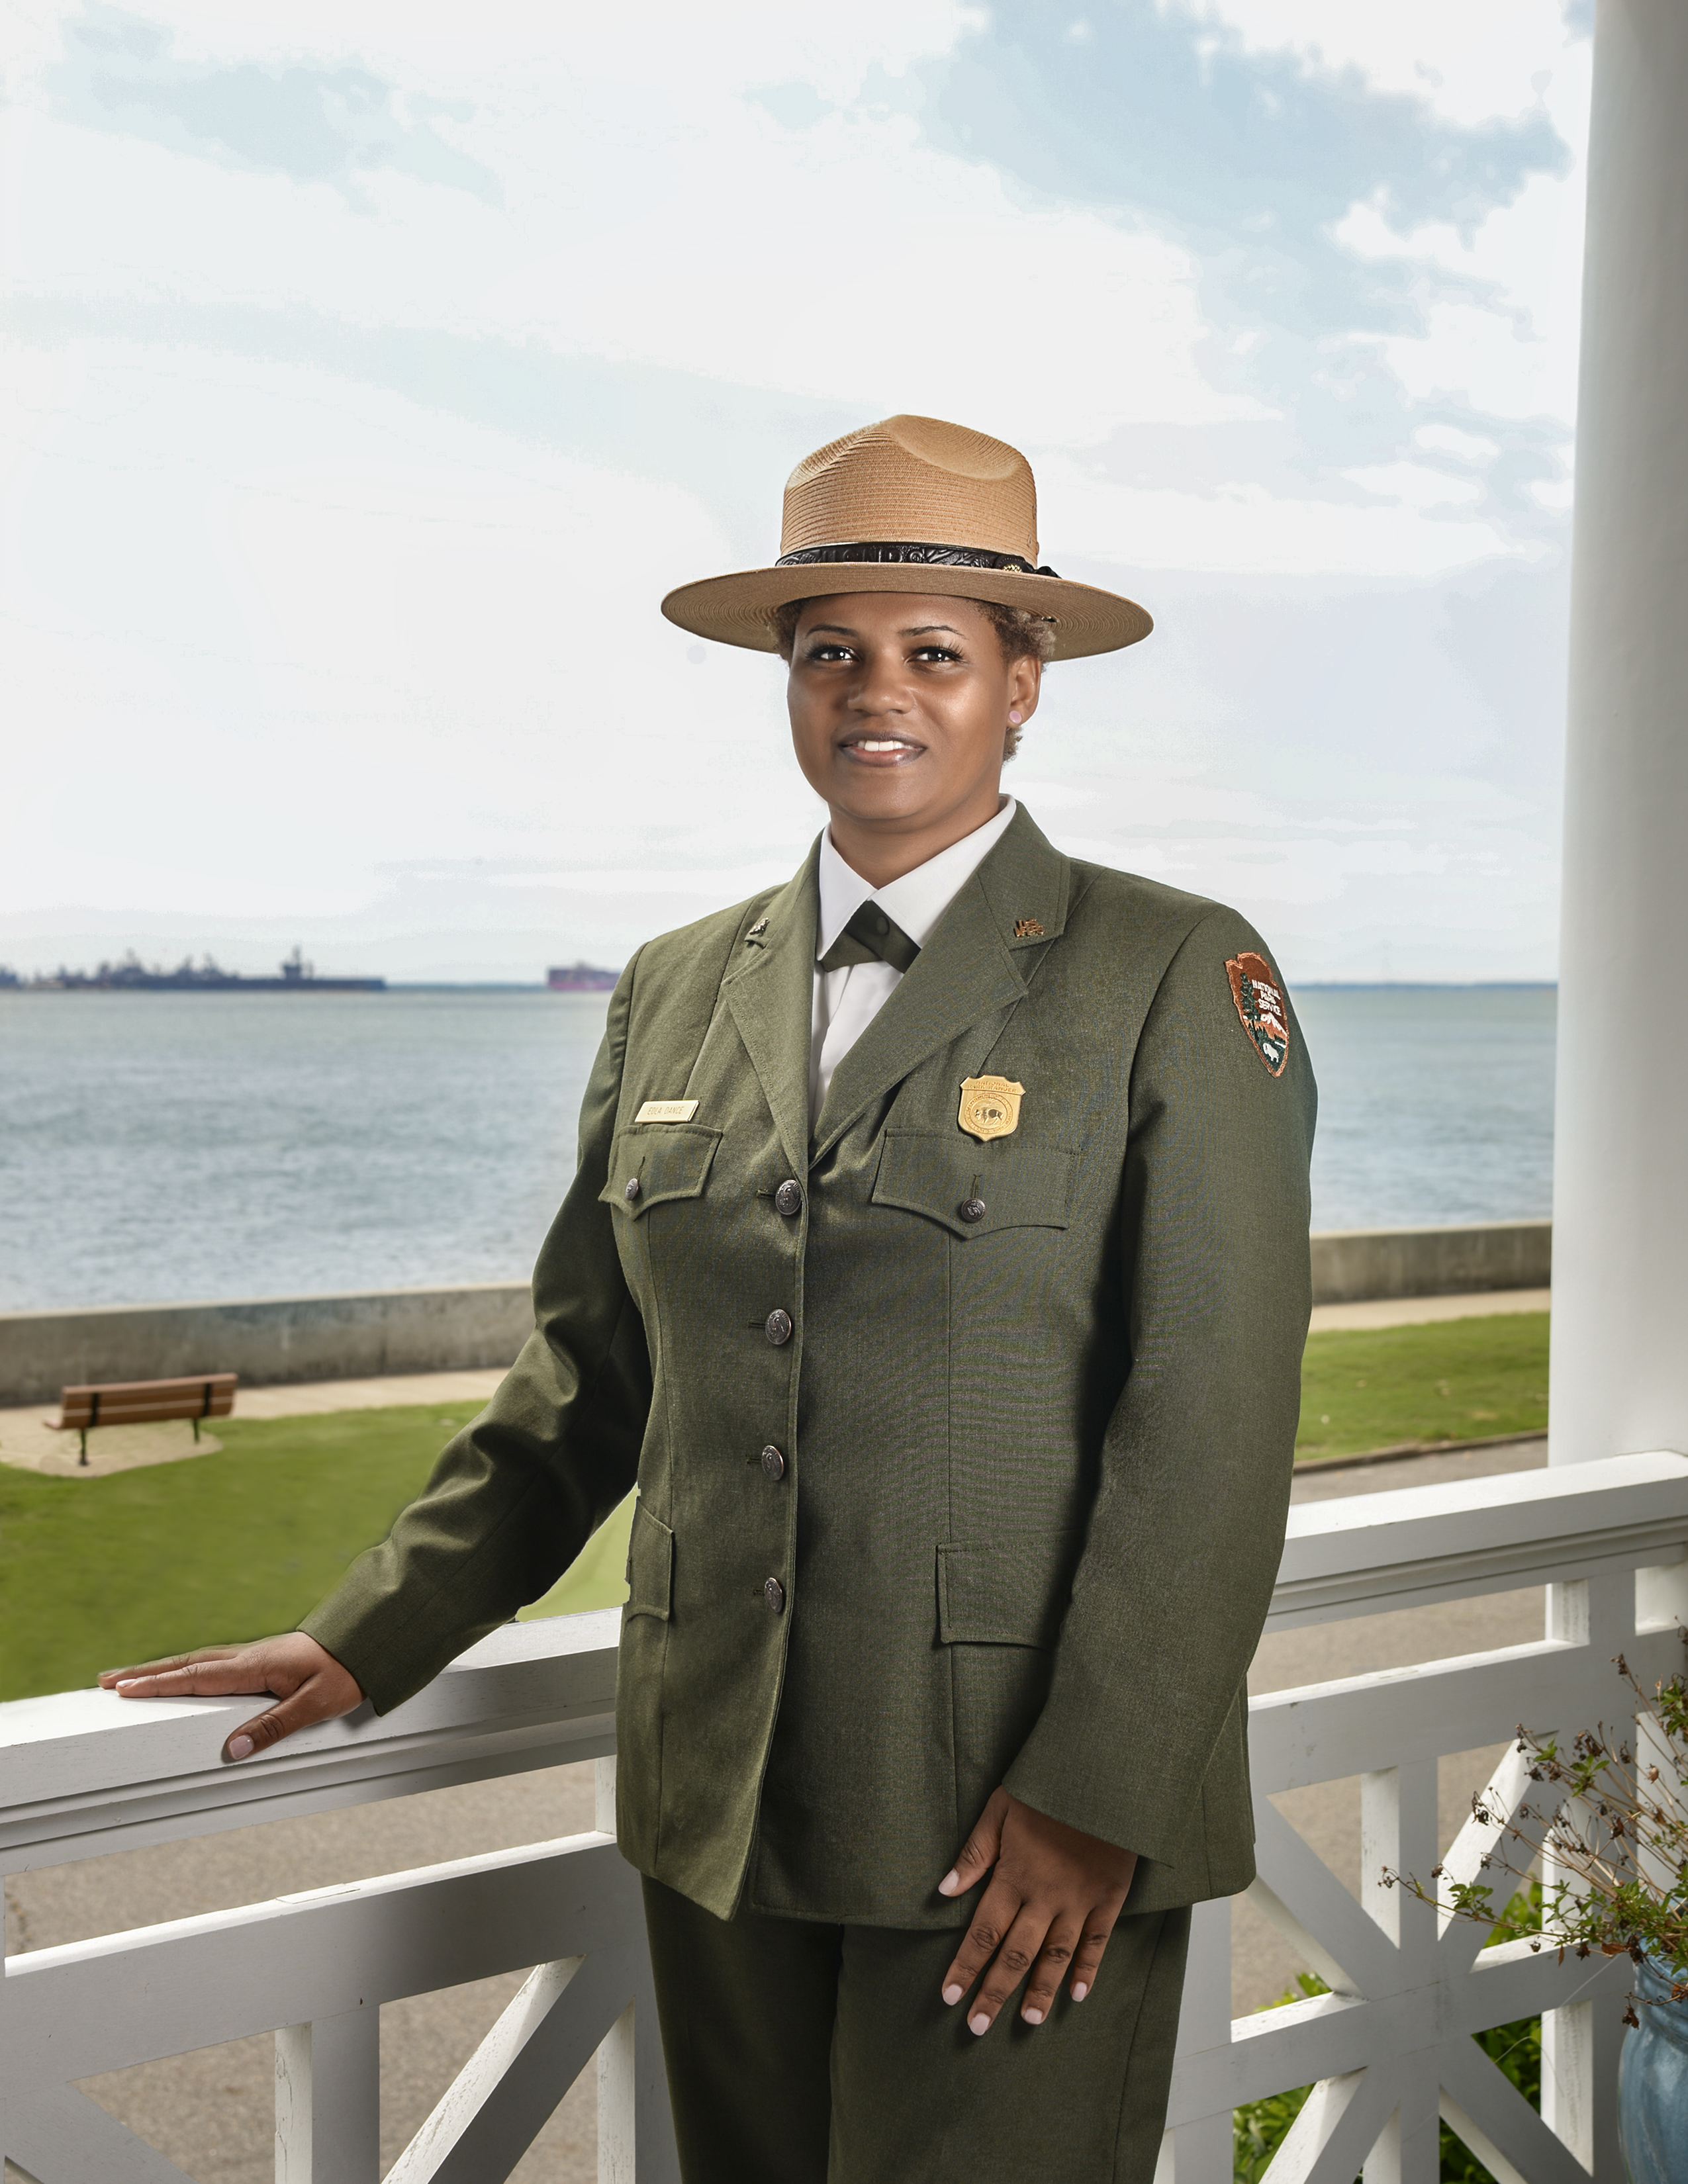 A woman in a National Park Service uniform